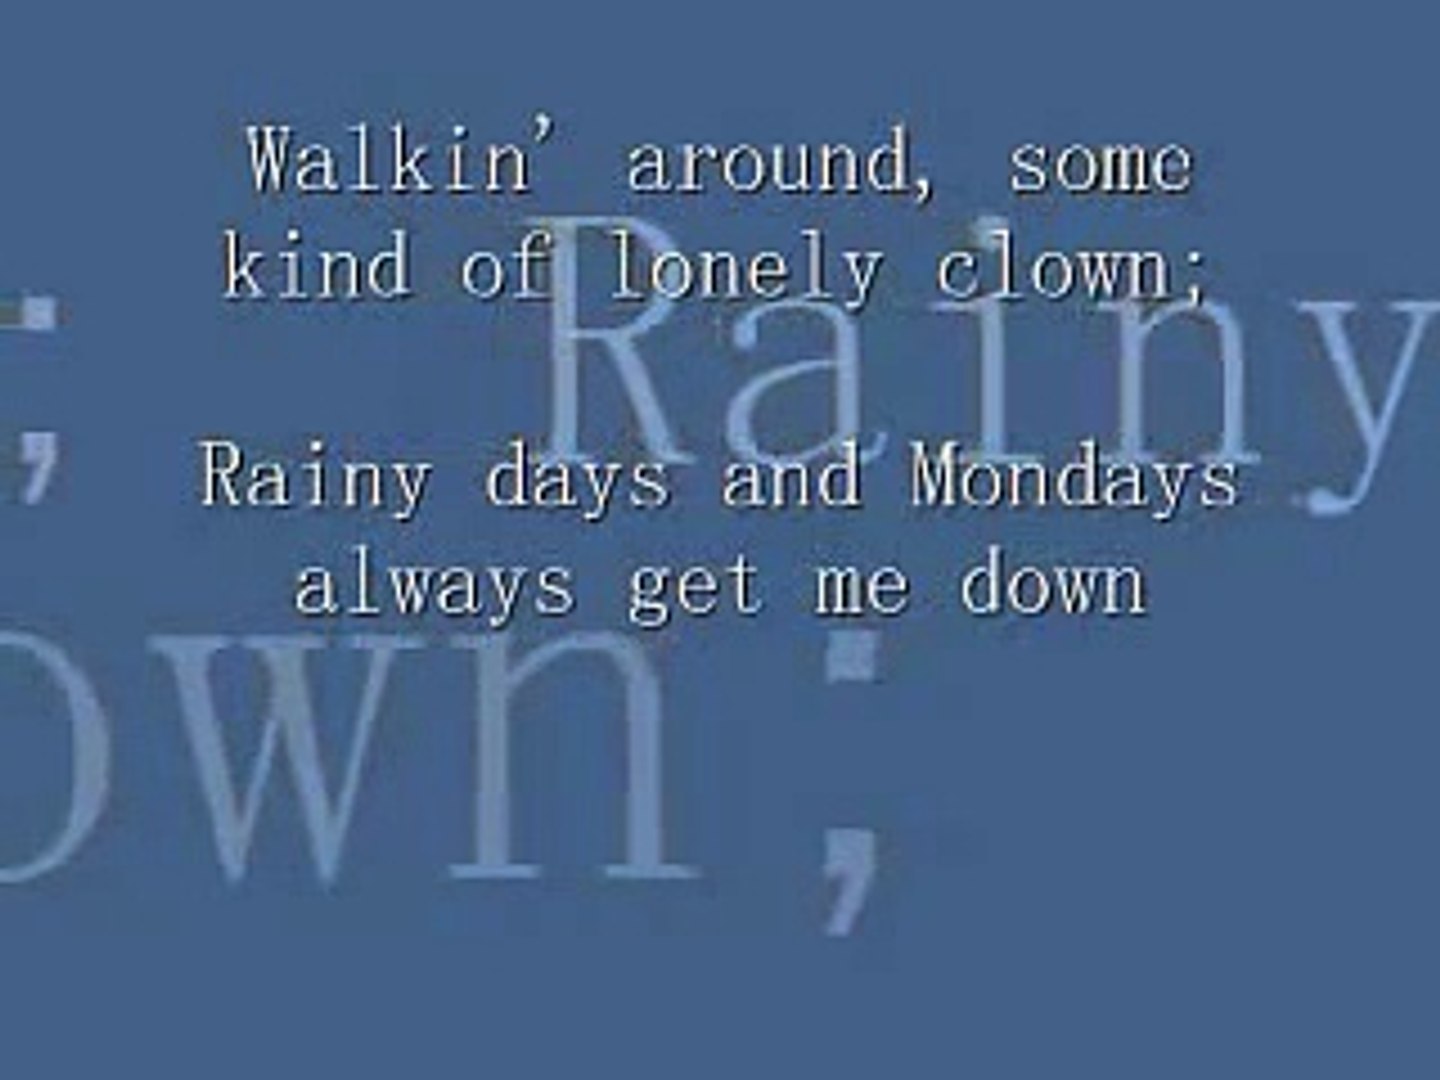 Rainy days and Mondays lyrics 